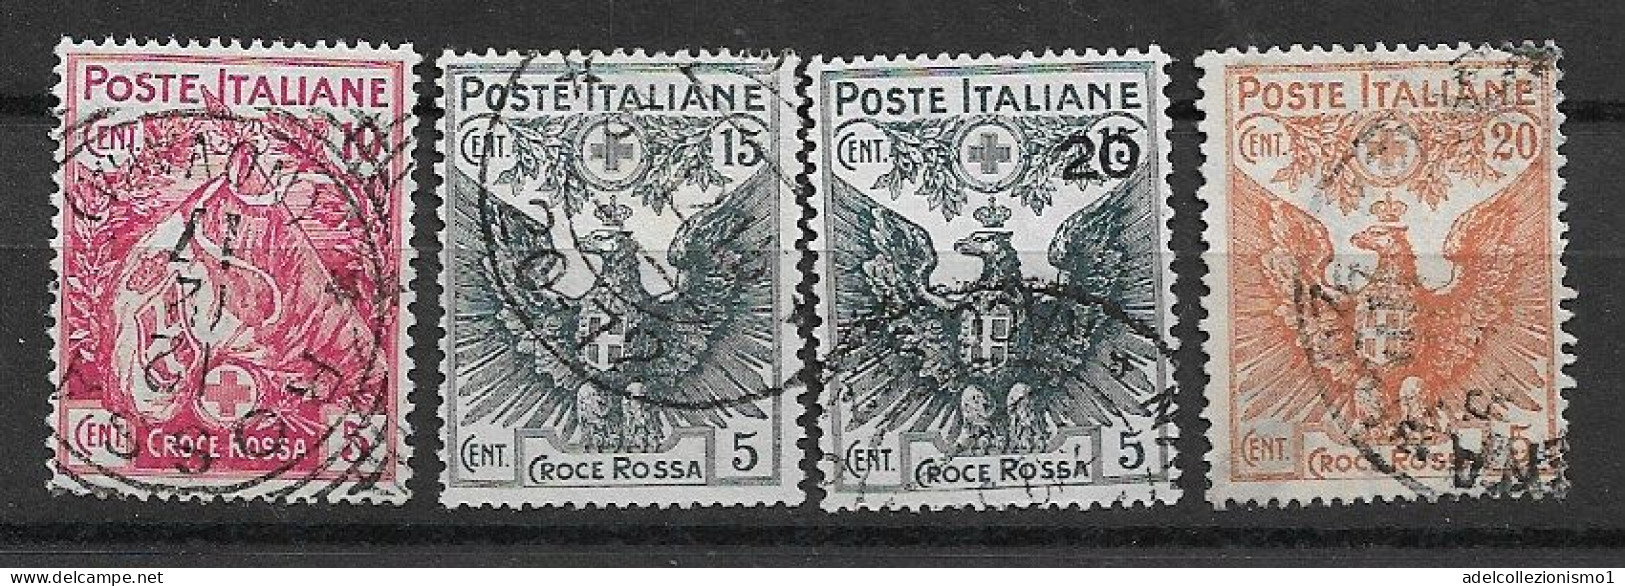 49549) Pro Croce Rossa - 1915/1916  -SERIE COMPLETA USATA - Publicité